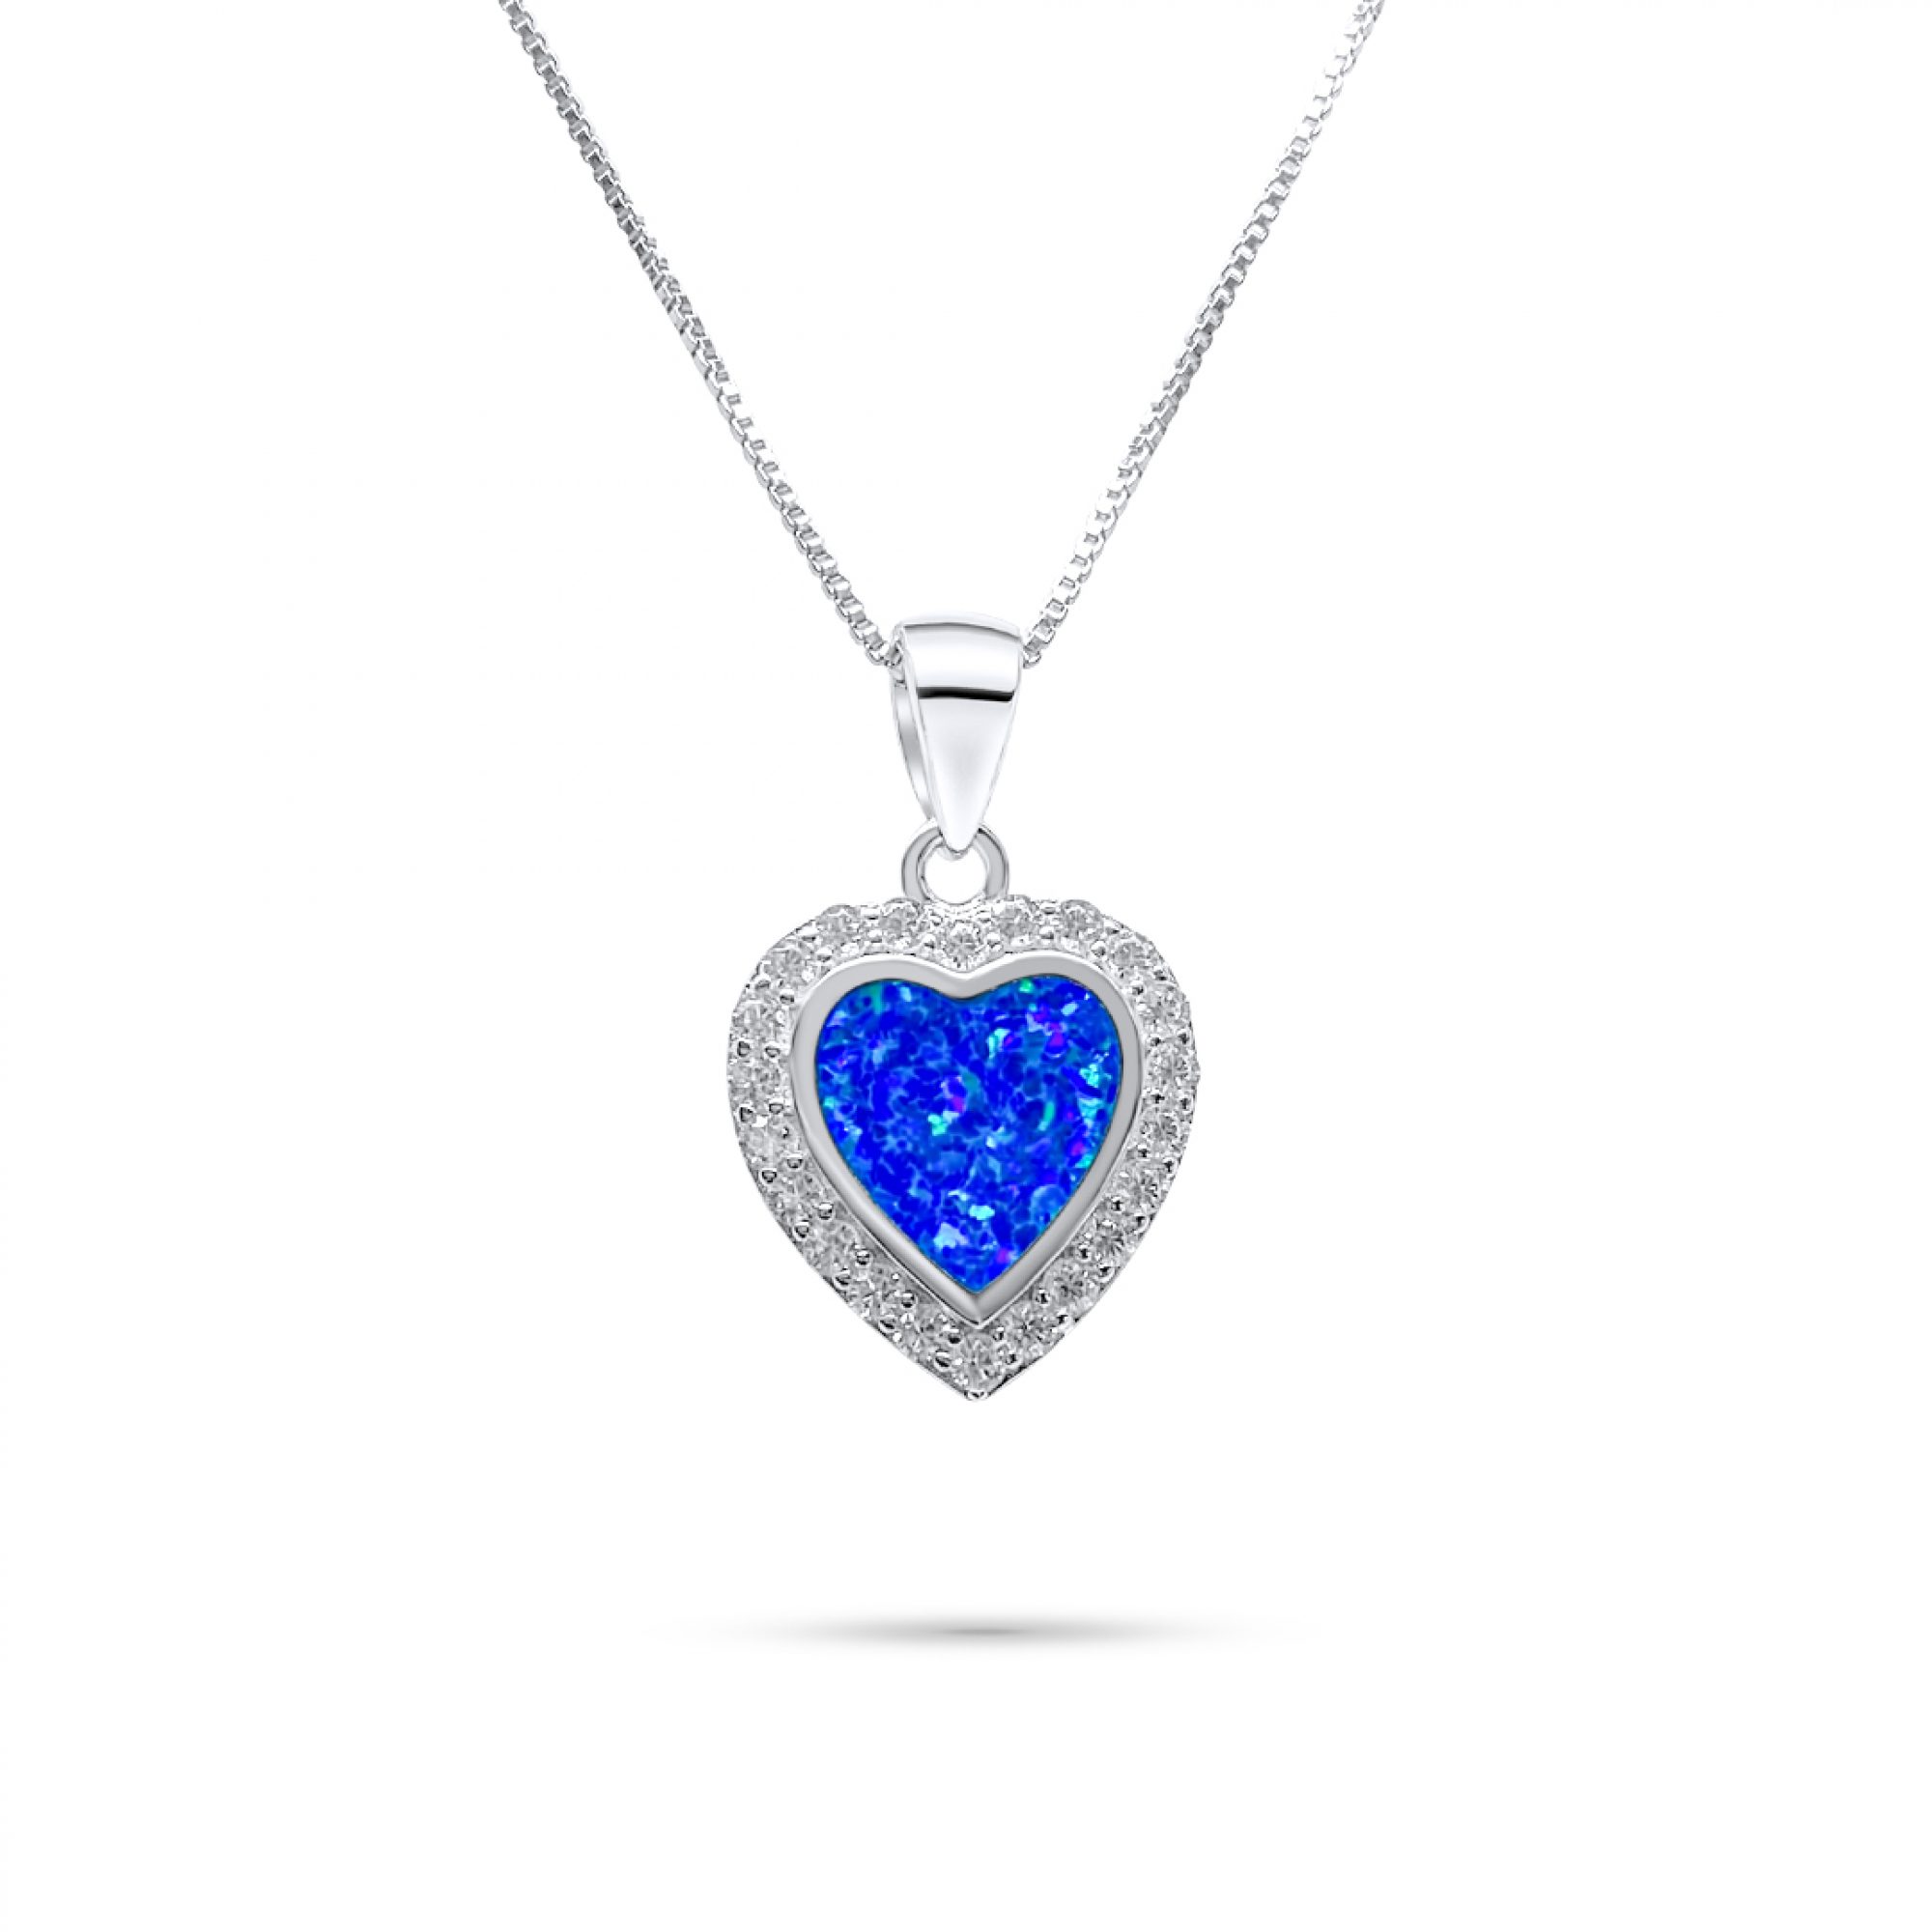 Opal heart pendant with zircon stones